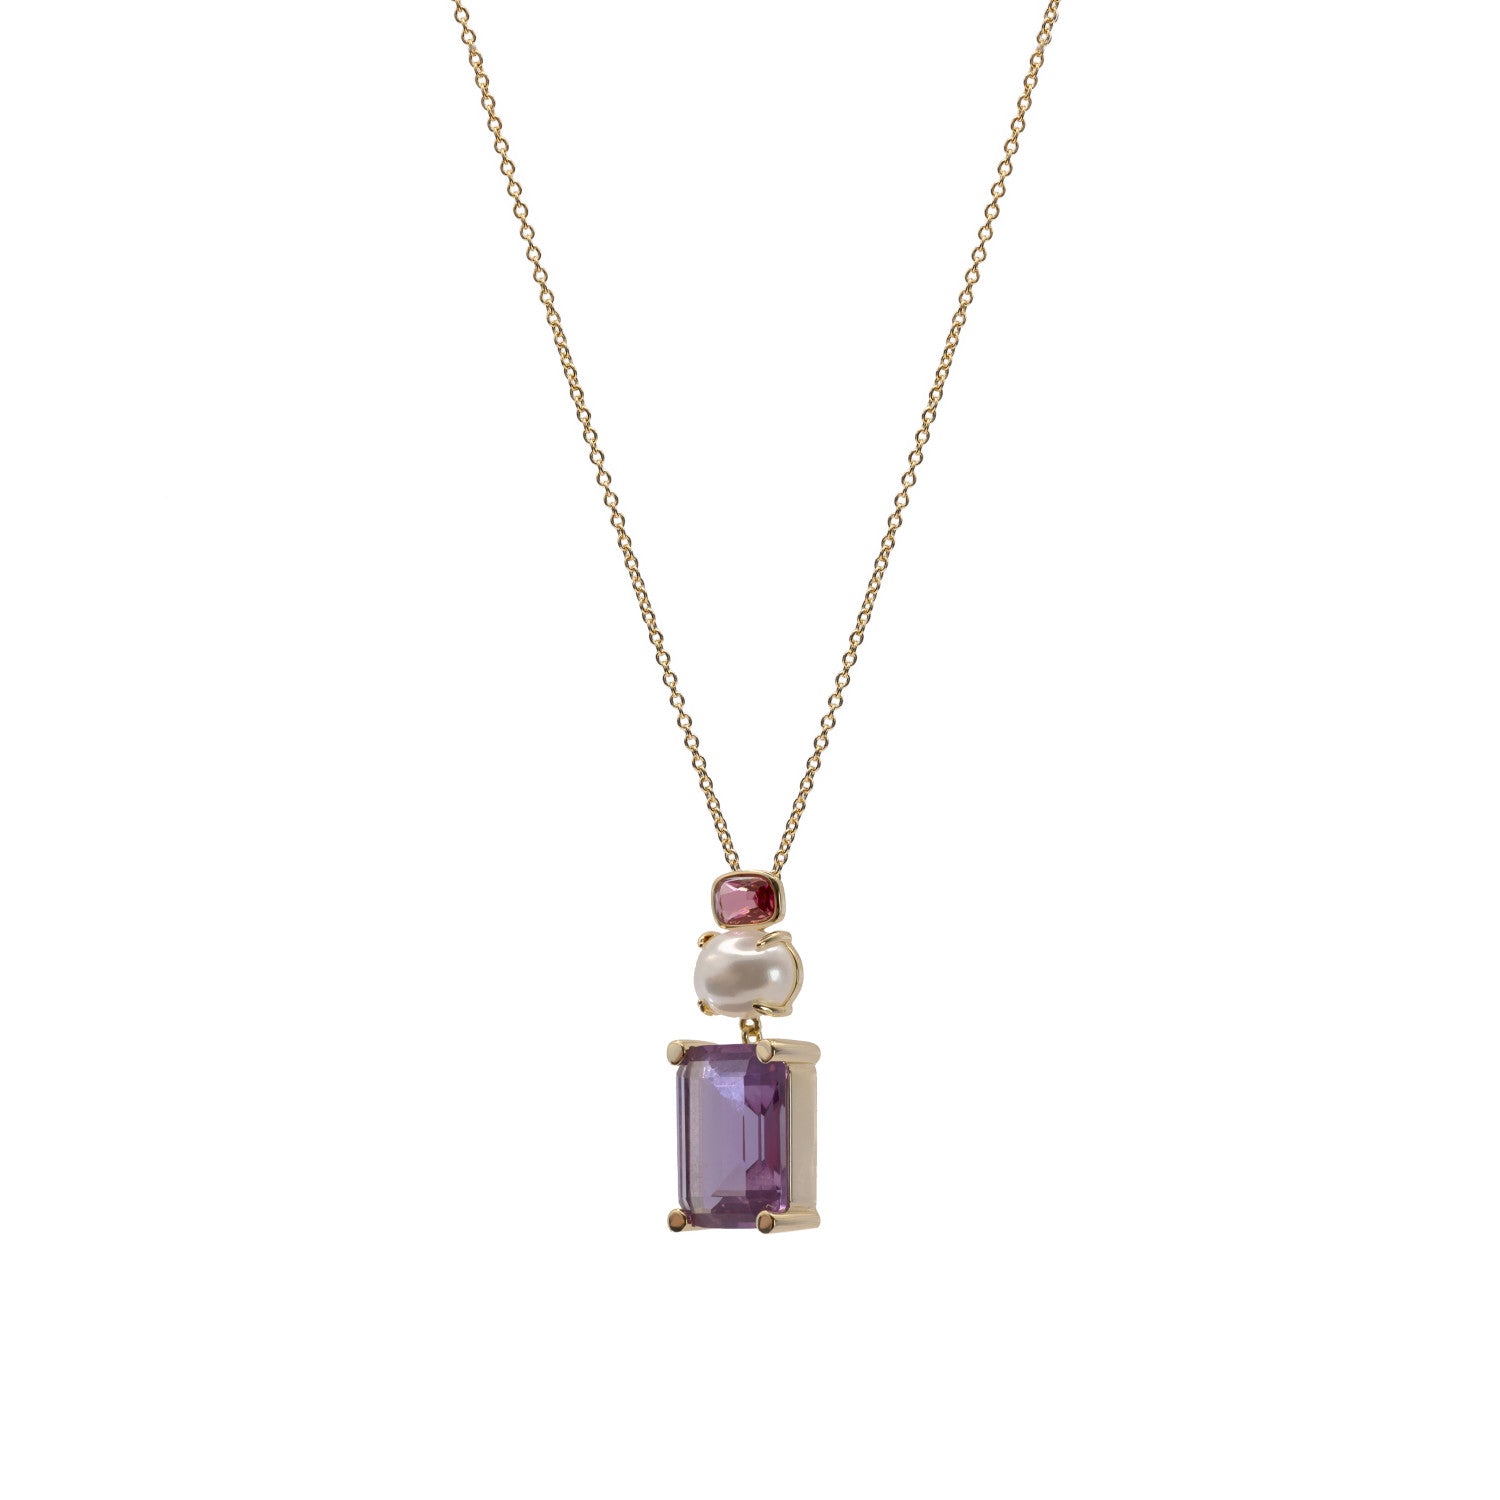 Necklaces with stones geometric design in purple tones